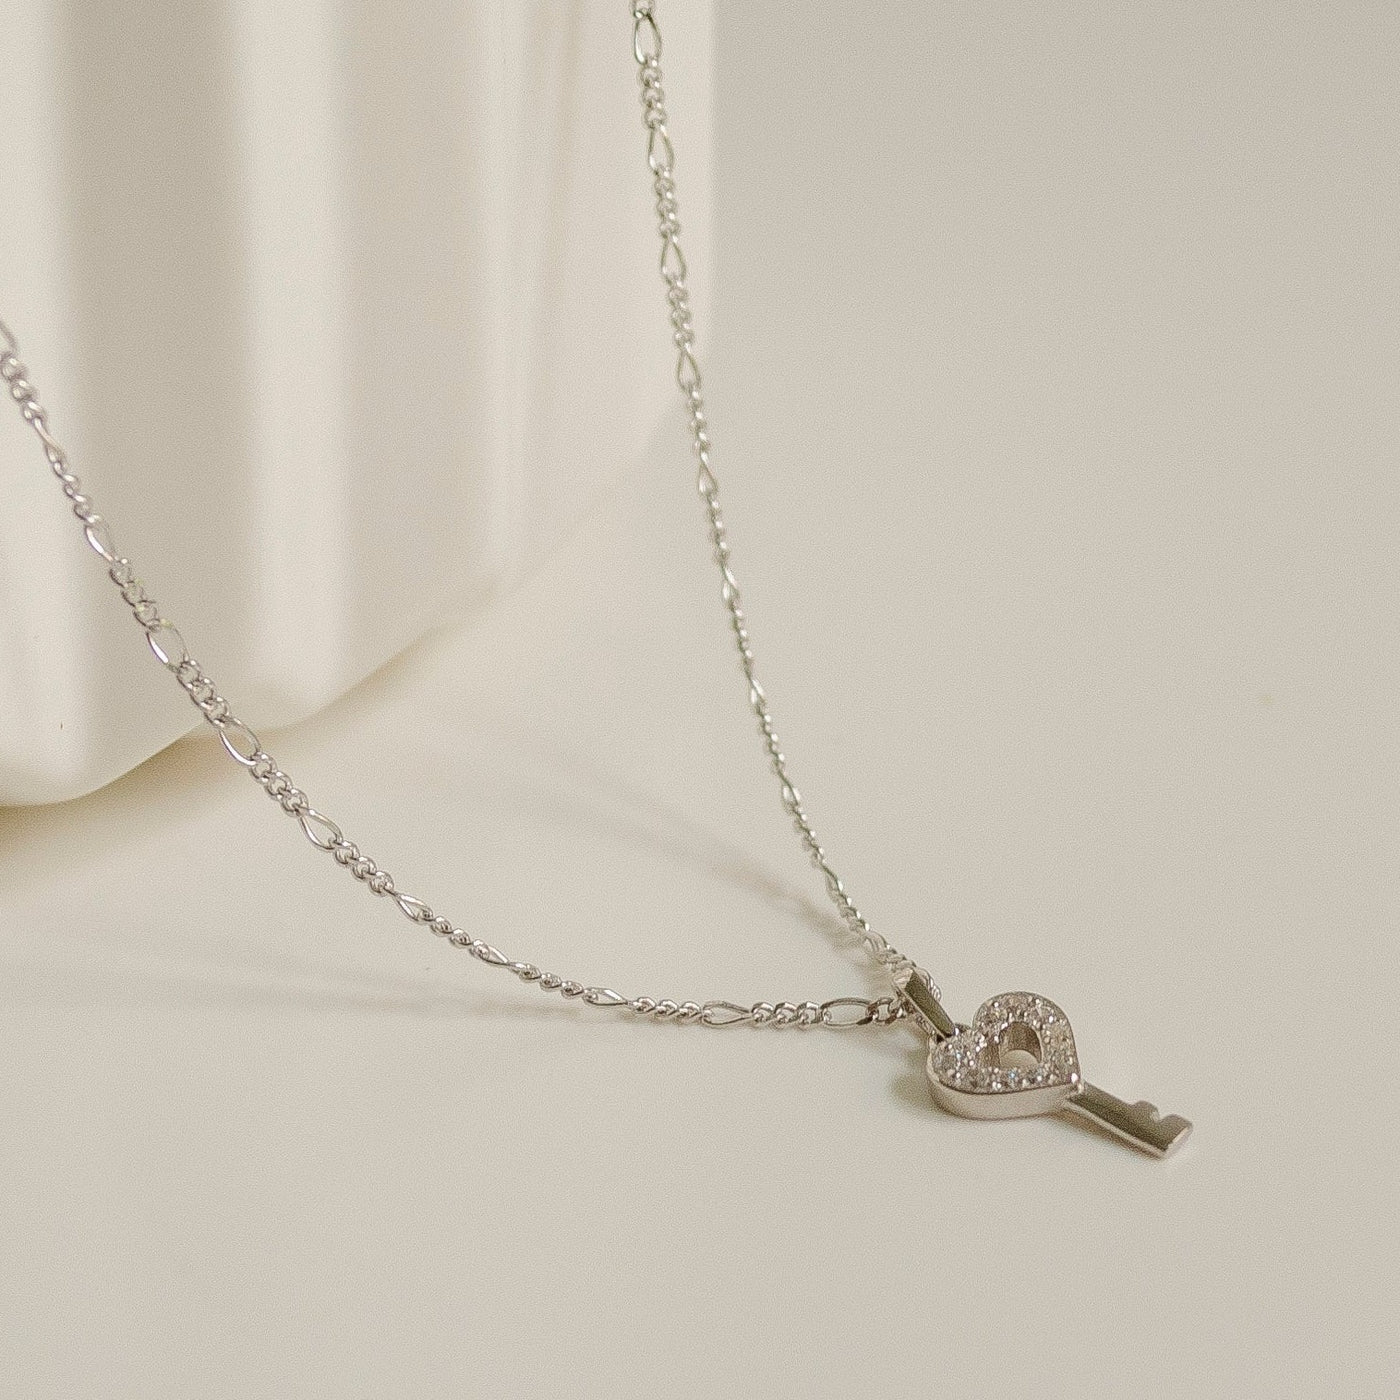 Heart Key Pendant Necklace Sterling Silver